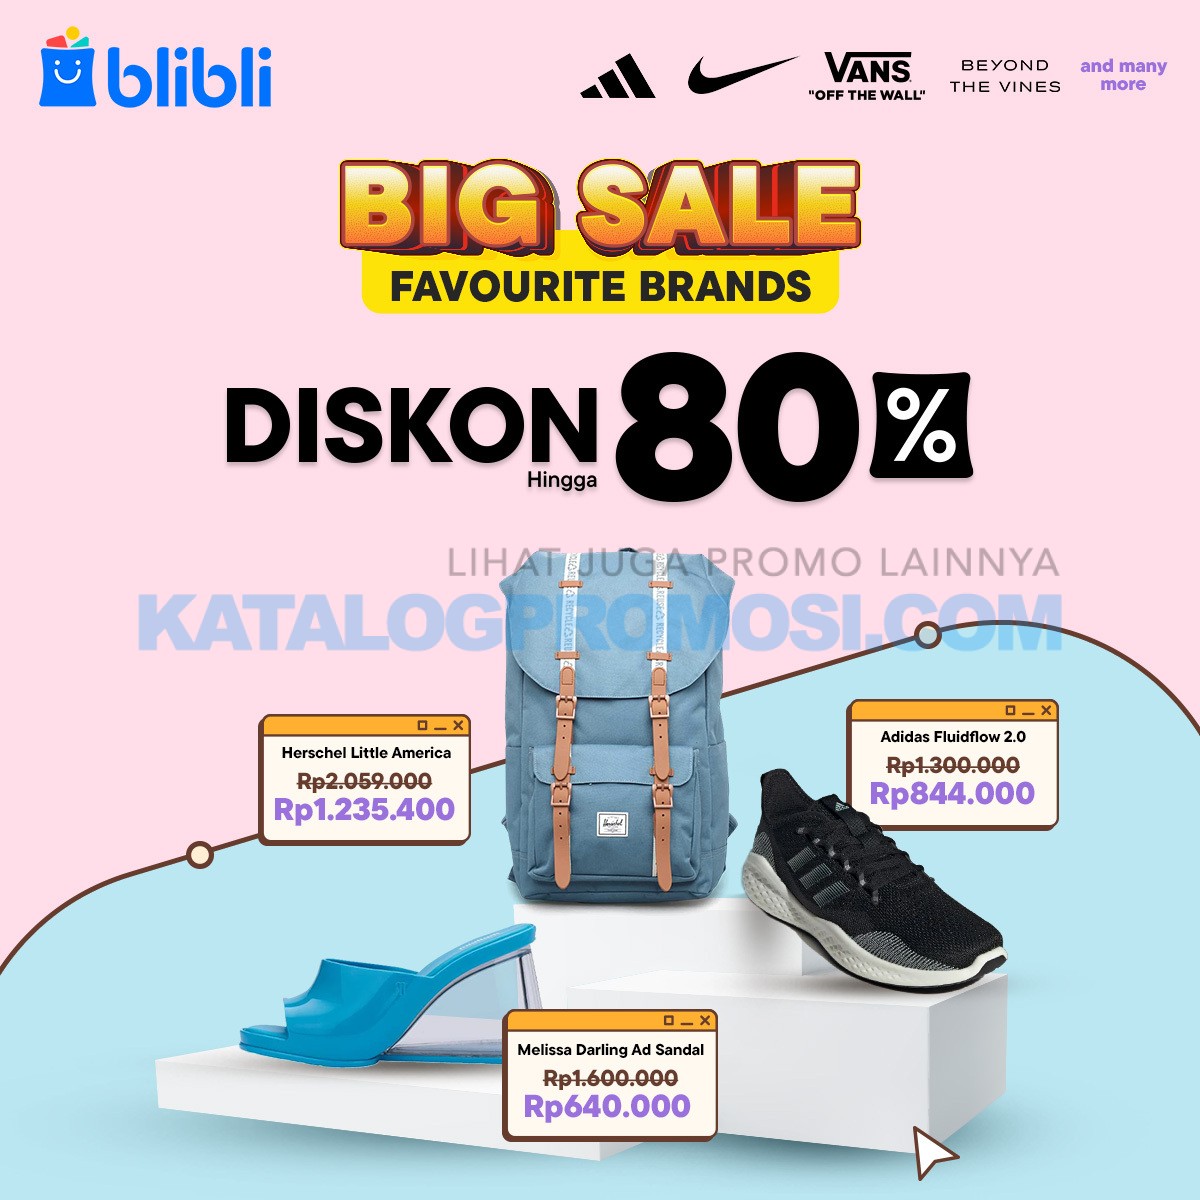 promo_blibli_big_sale_favourite_brands_diskon.jpg